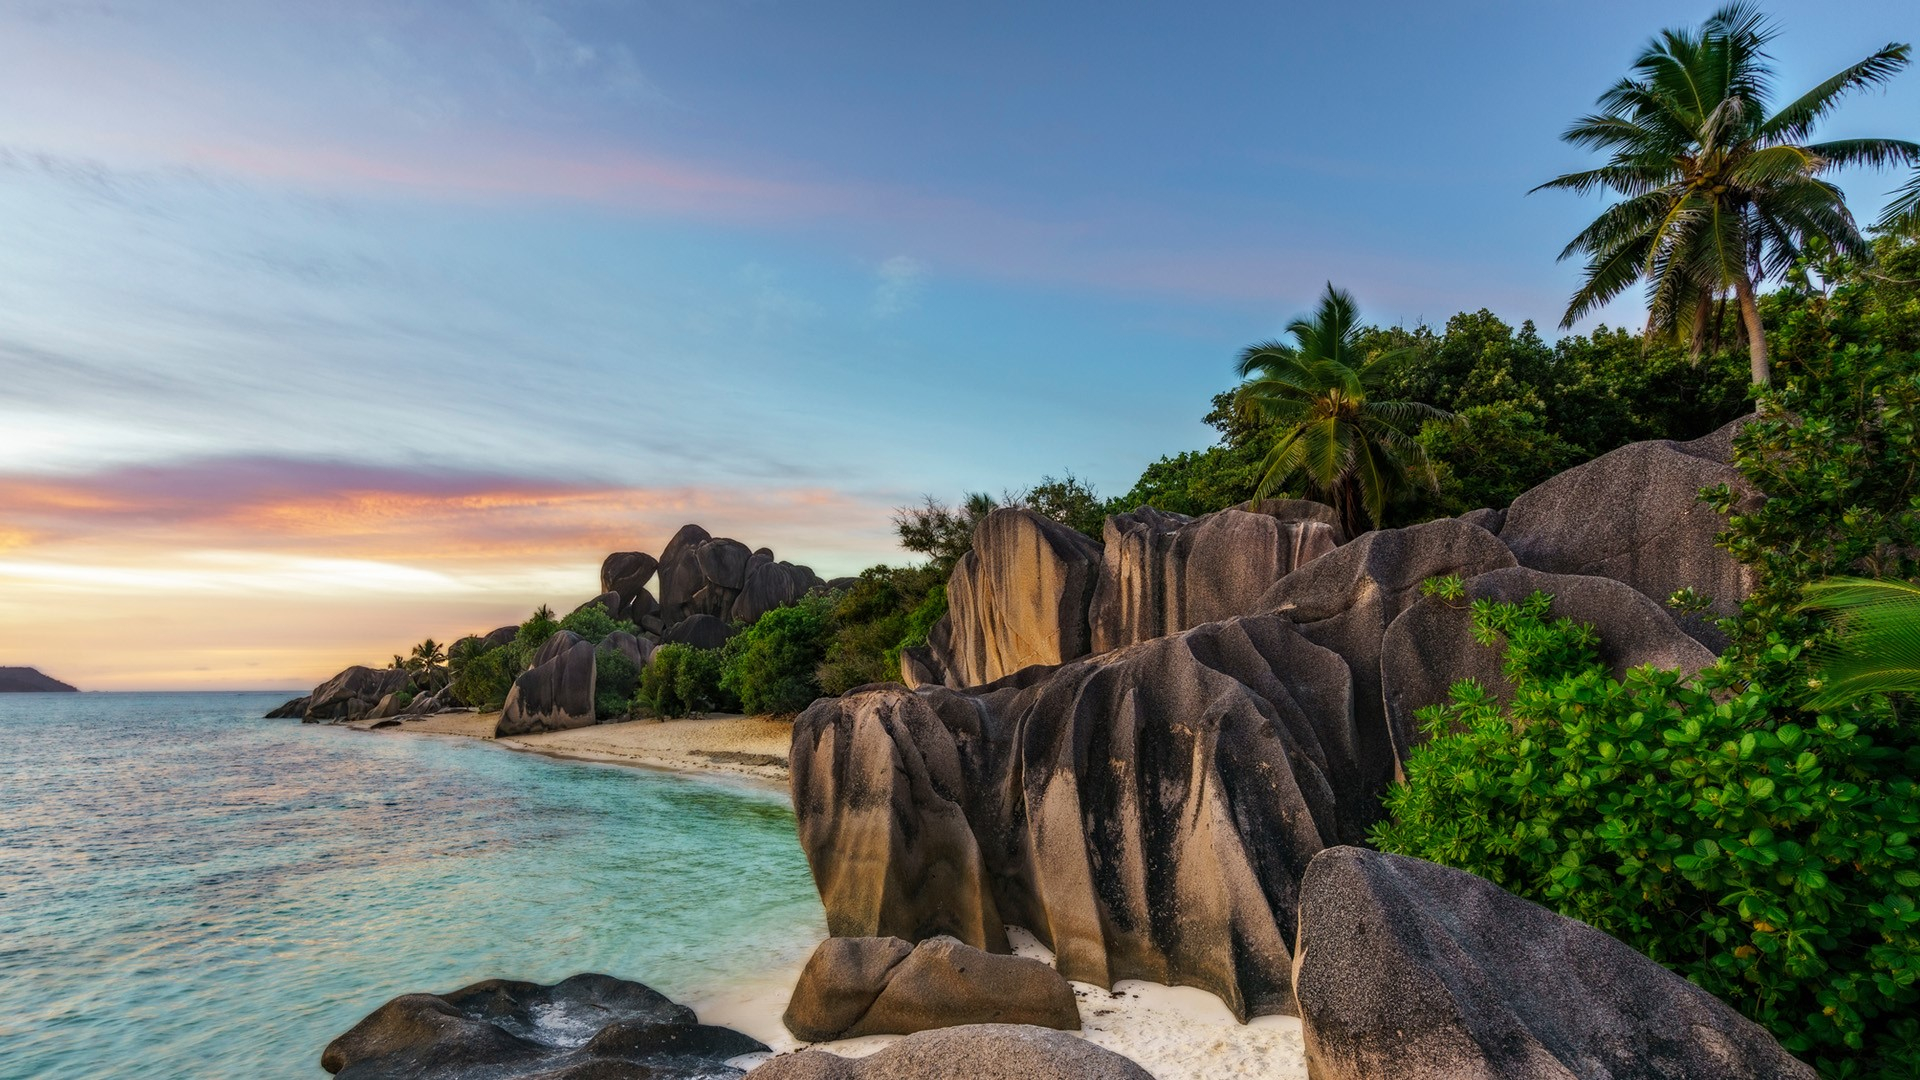 1920x1080 Sunset over rocks at beach Anse Source d'Argent, La Digue Island, Seychelles | Windows 10 Spotlight Images